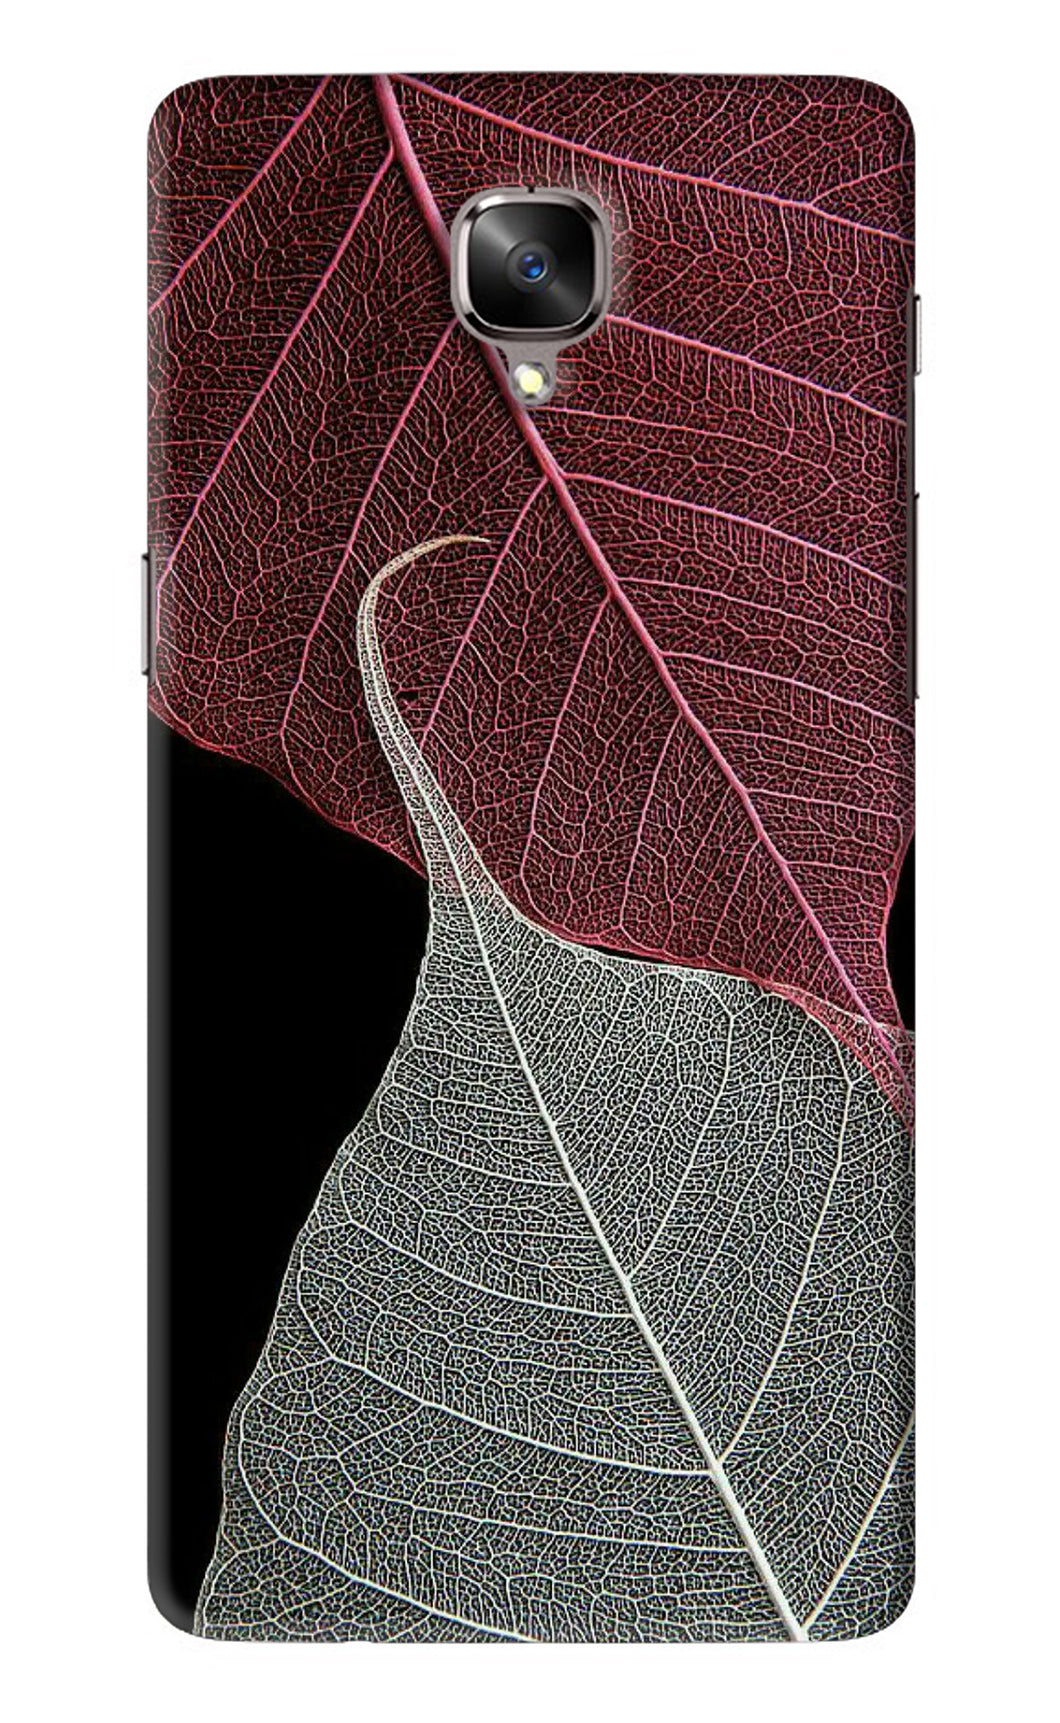 Leaf Pattern OnePlus 3 Back Skin Wrap